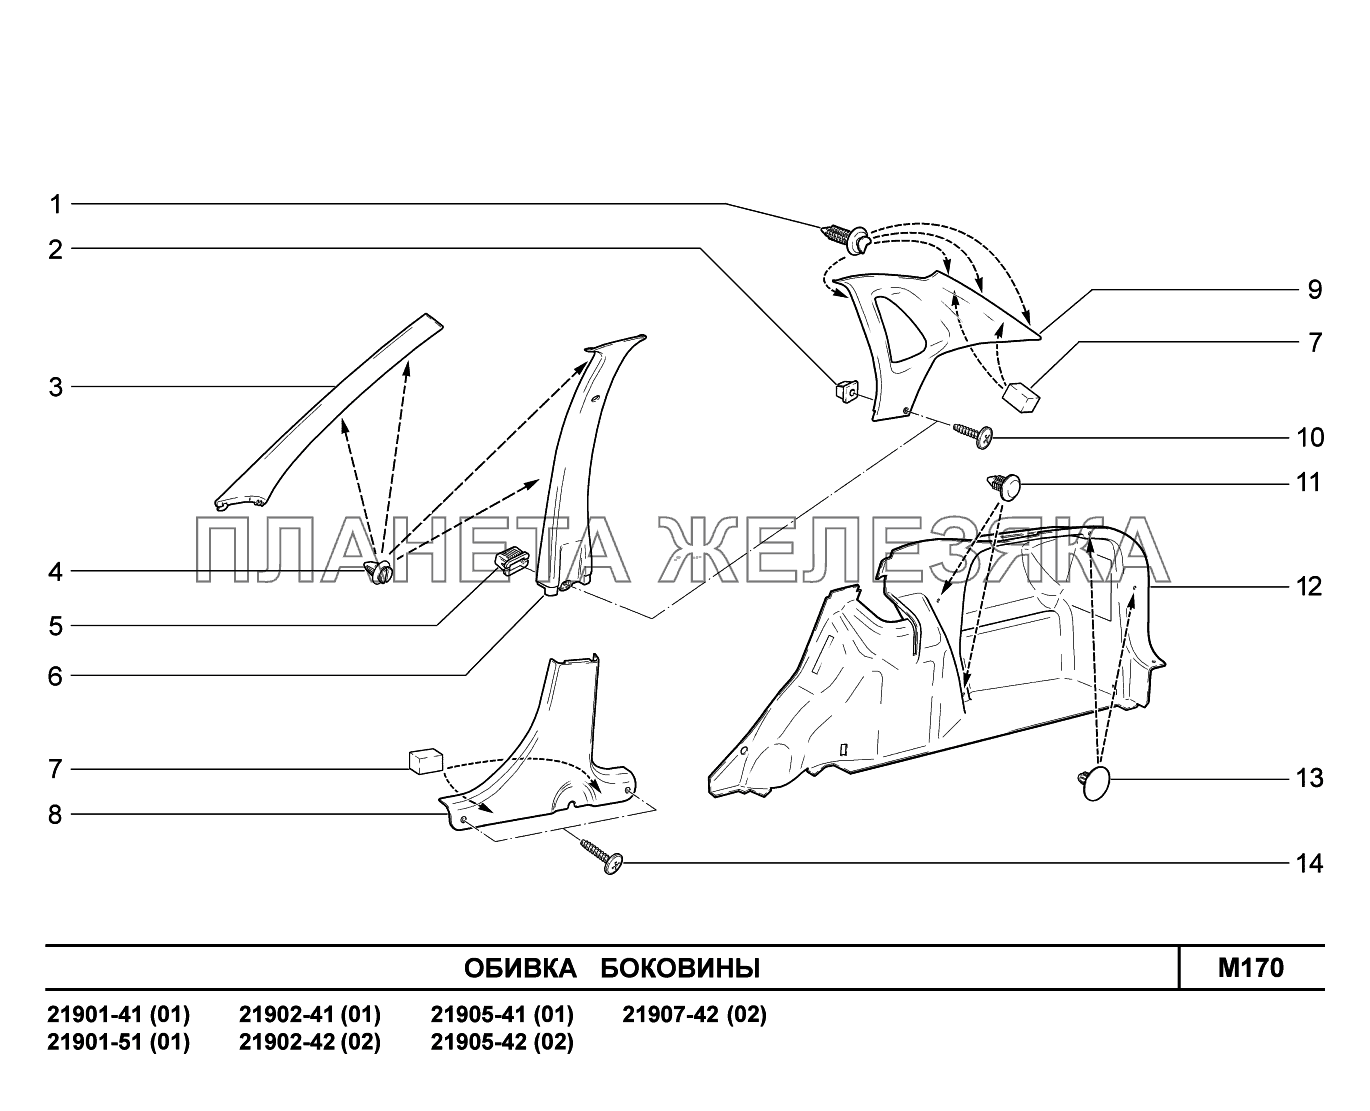 M170. Обивка боковины Lada Granta-2190